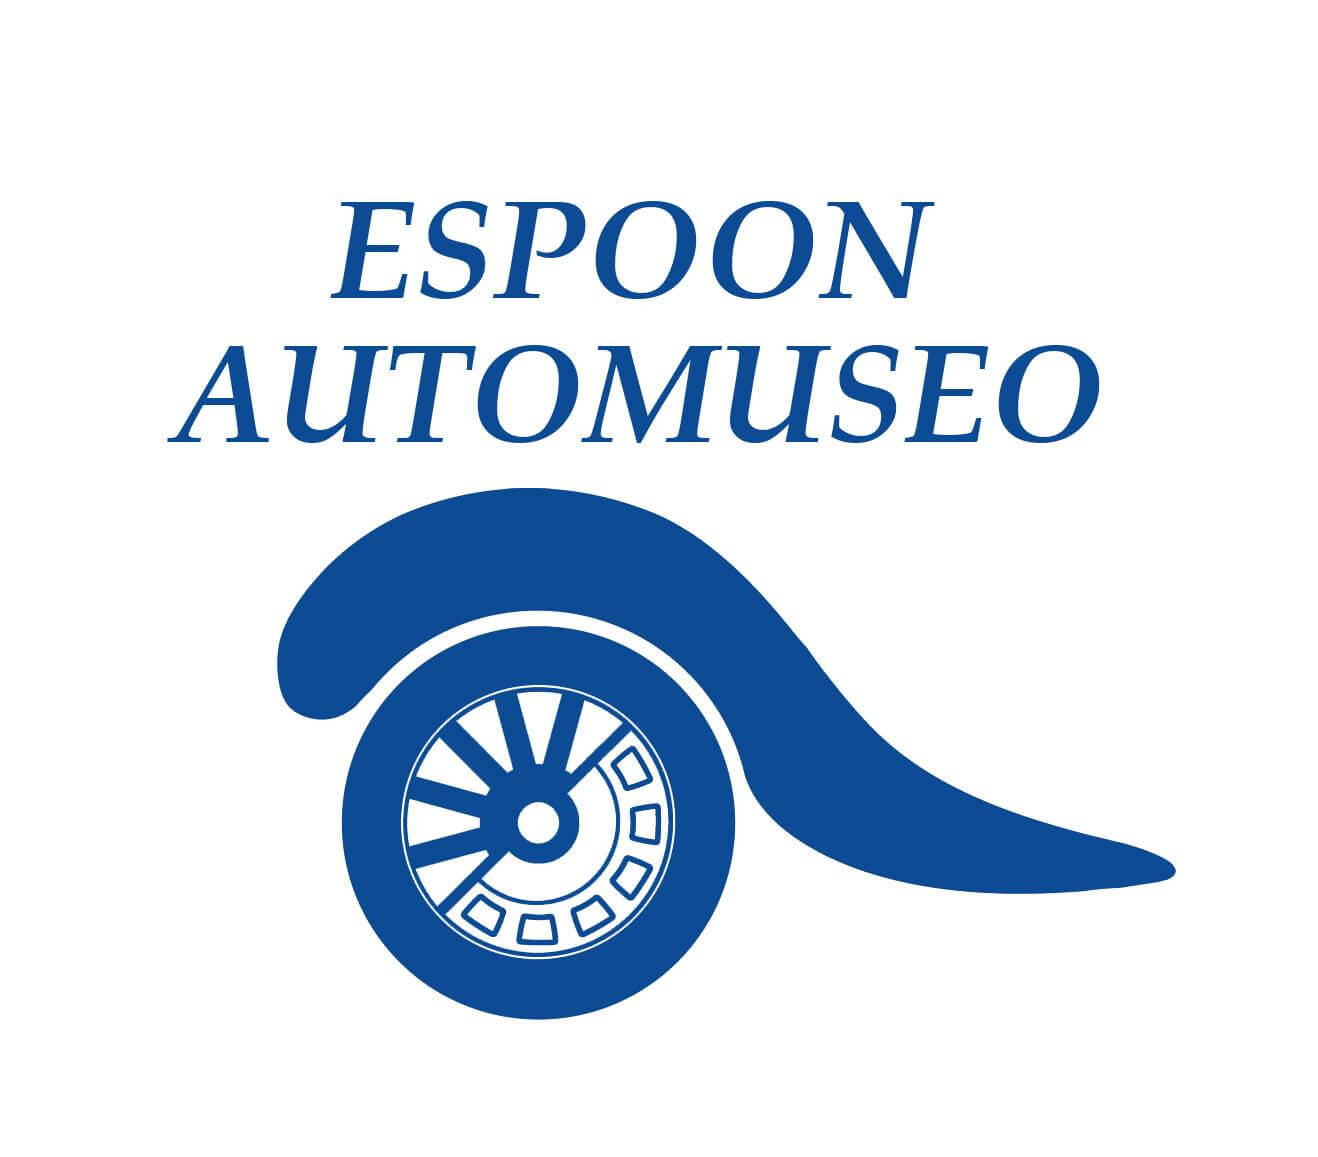 Espoon Automuseon logo